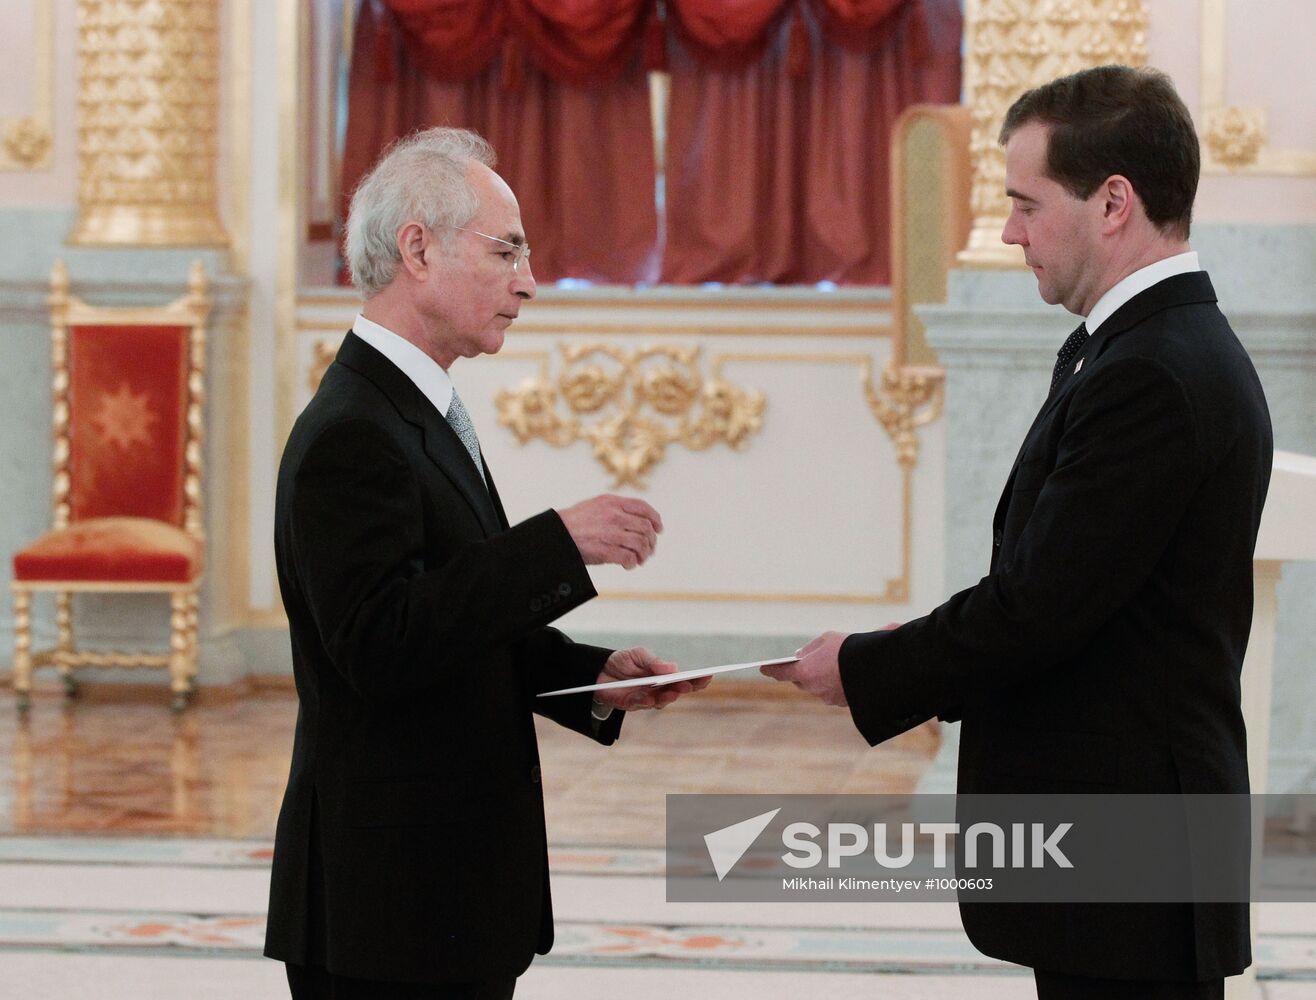 Dmitry Medvedev receives credentials from ambassadors